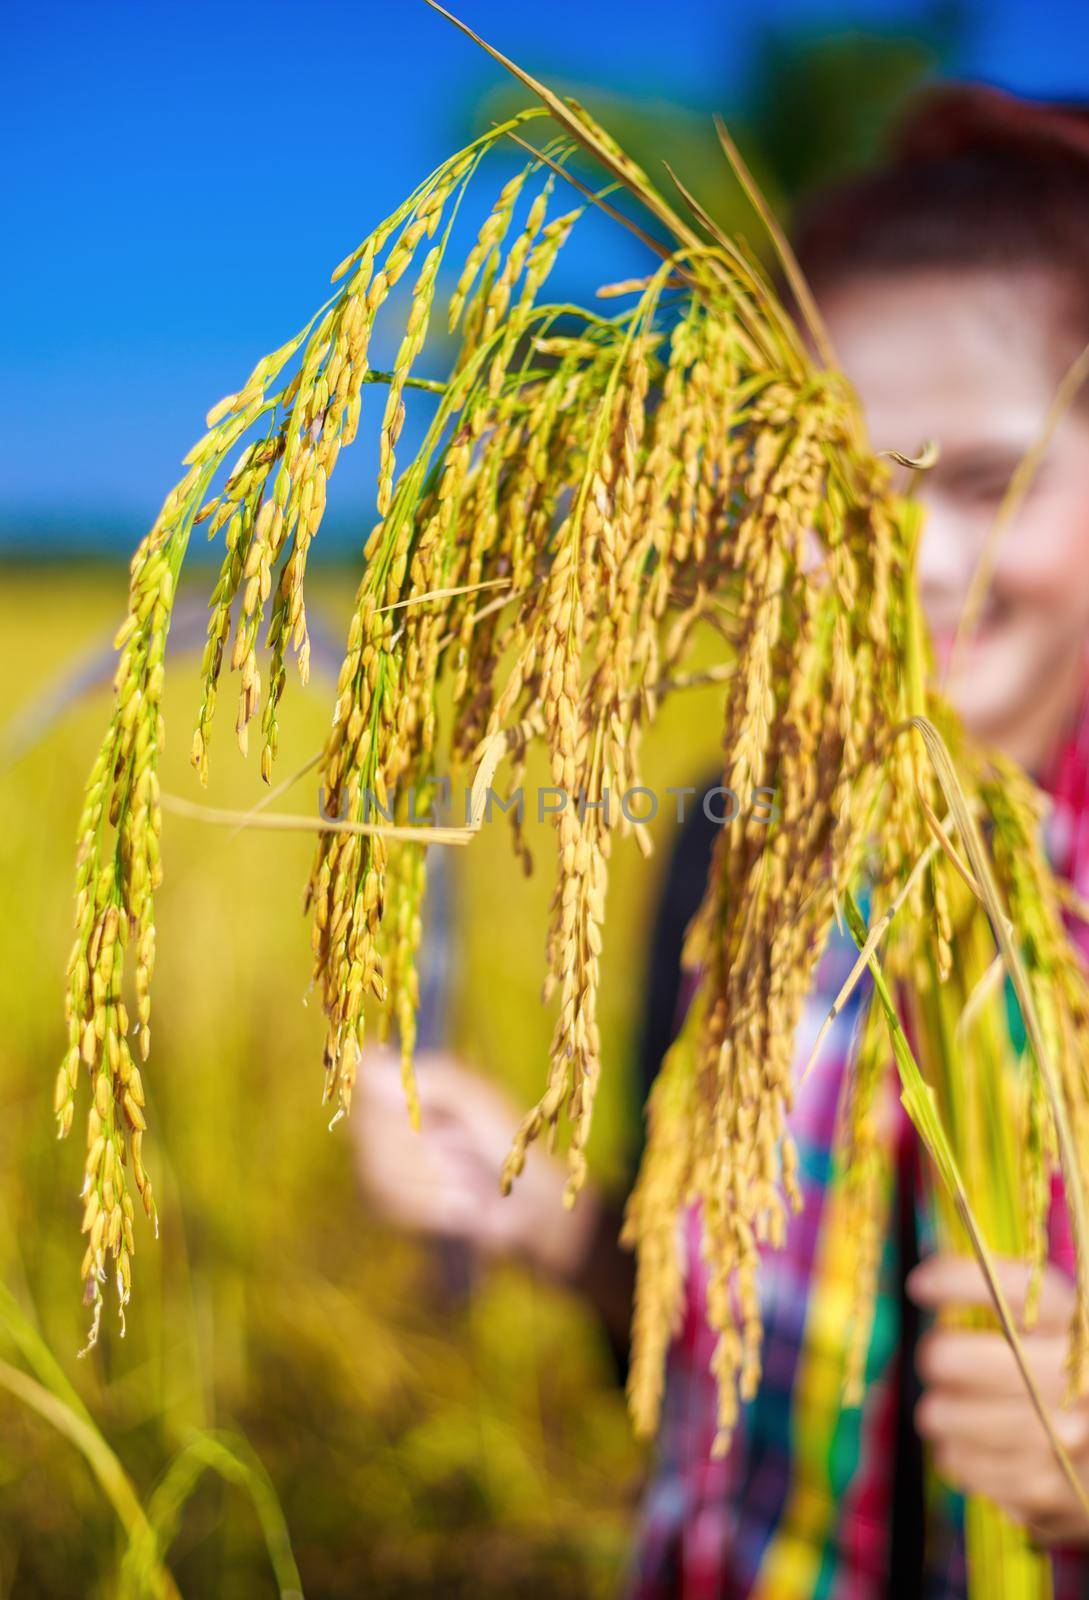 golden rice in hand of farmer woman by geargodz